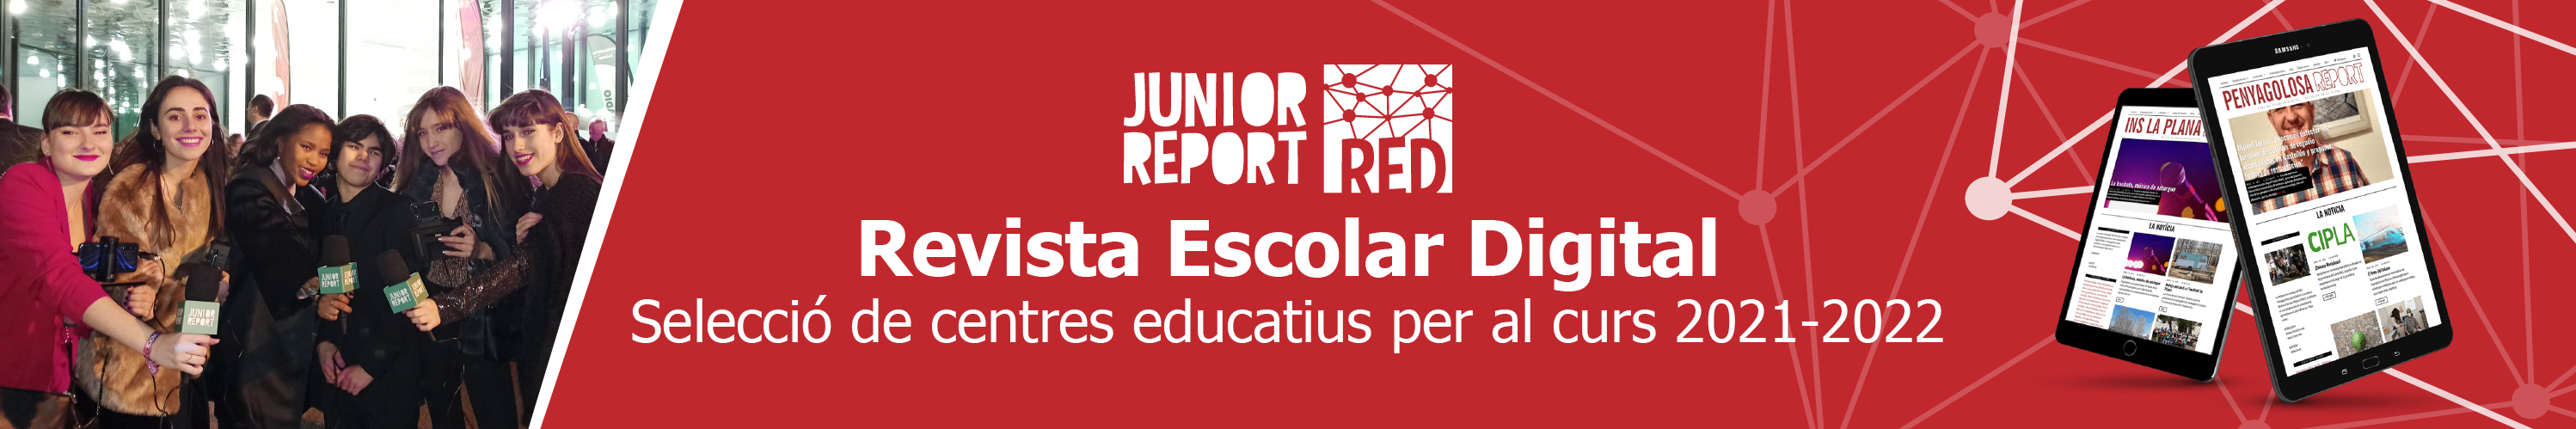 Banner para clicar y conocer el proyecto Junior Report RED Revista Escolar Digital, Selecció de centres educatius per al curs 2021-2022